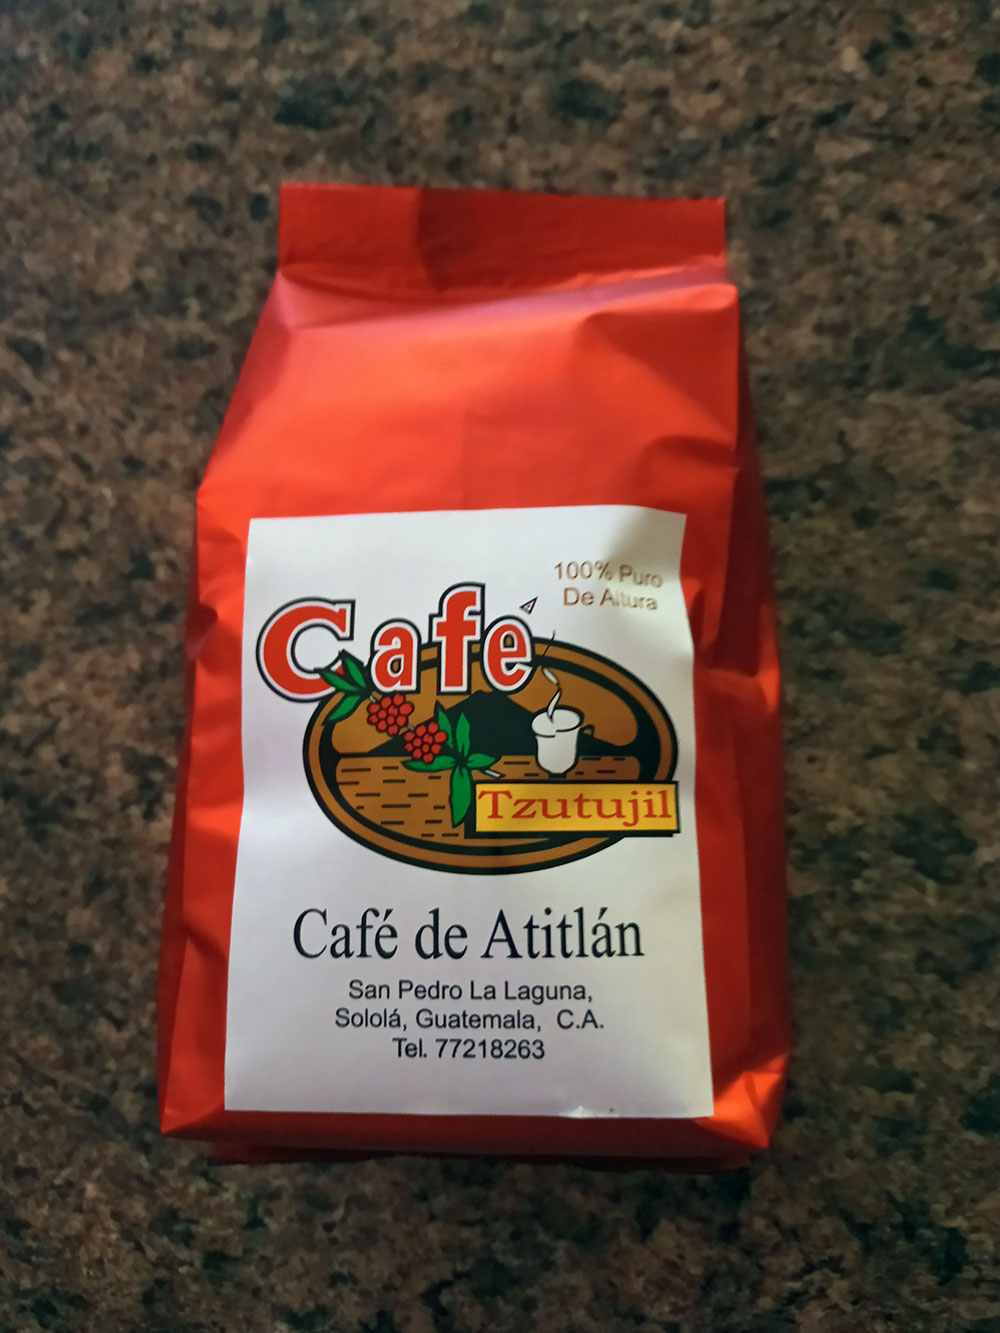 Guatemala Bullet Coffee Recipe